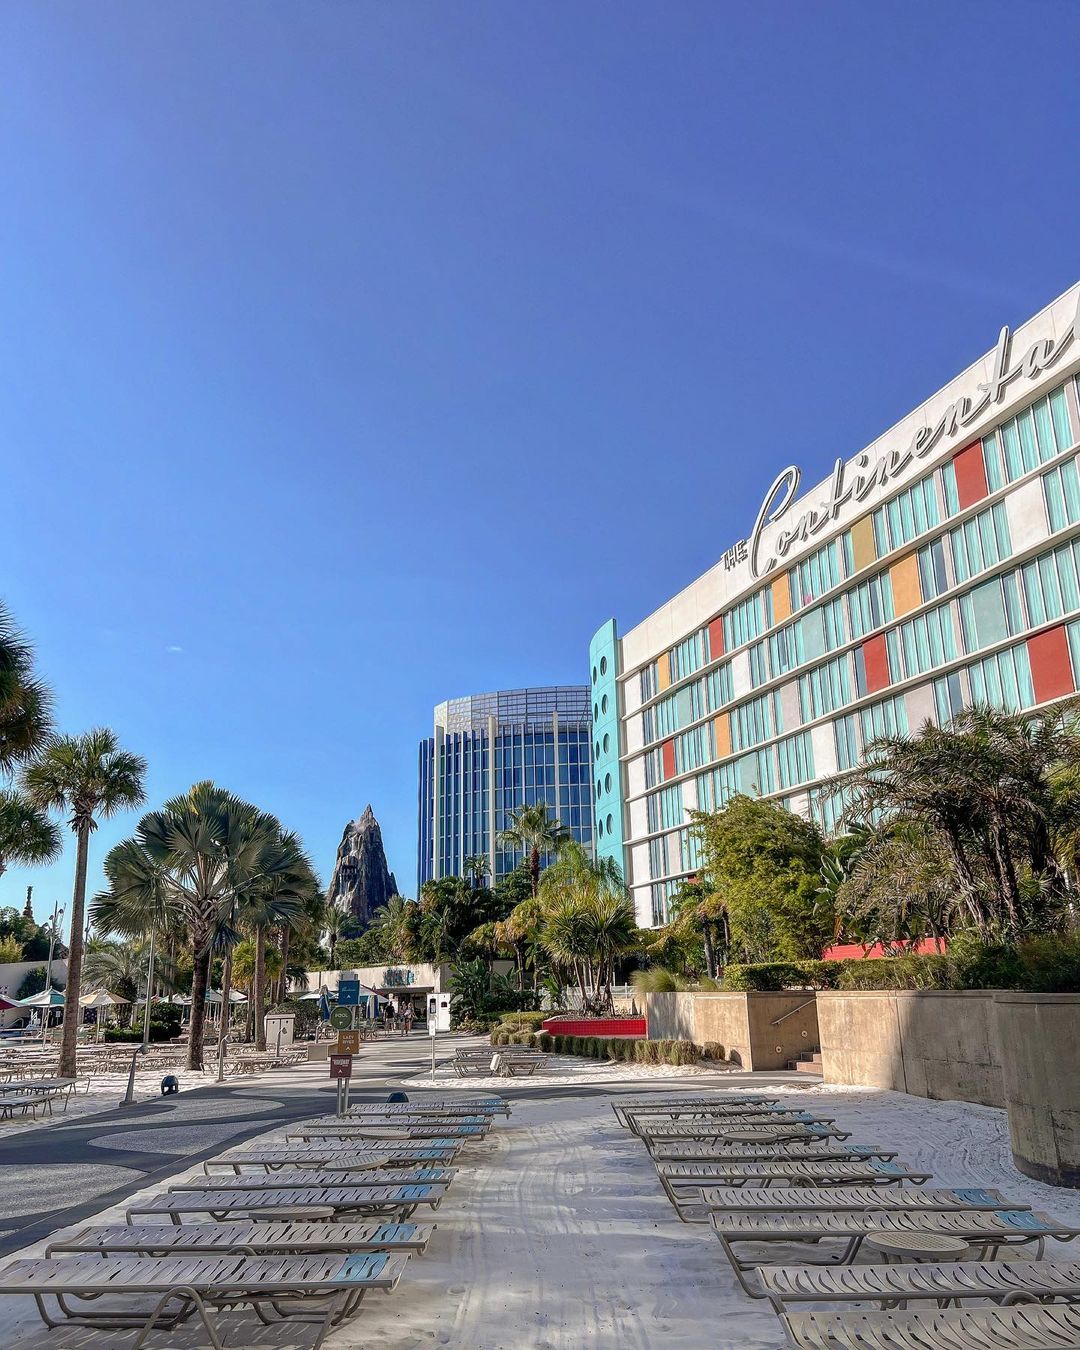 Cabana Bay Resort - Universal Studios Budget Hotel